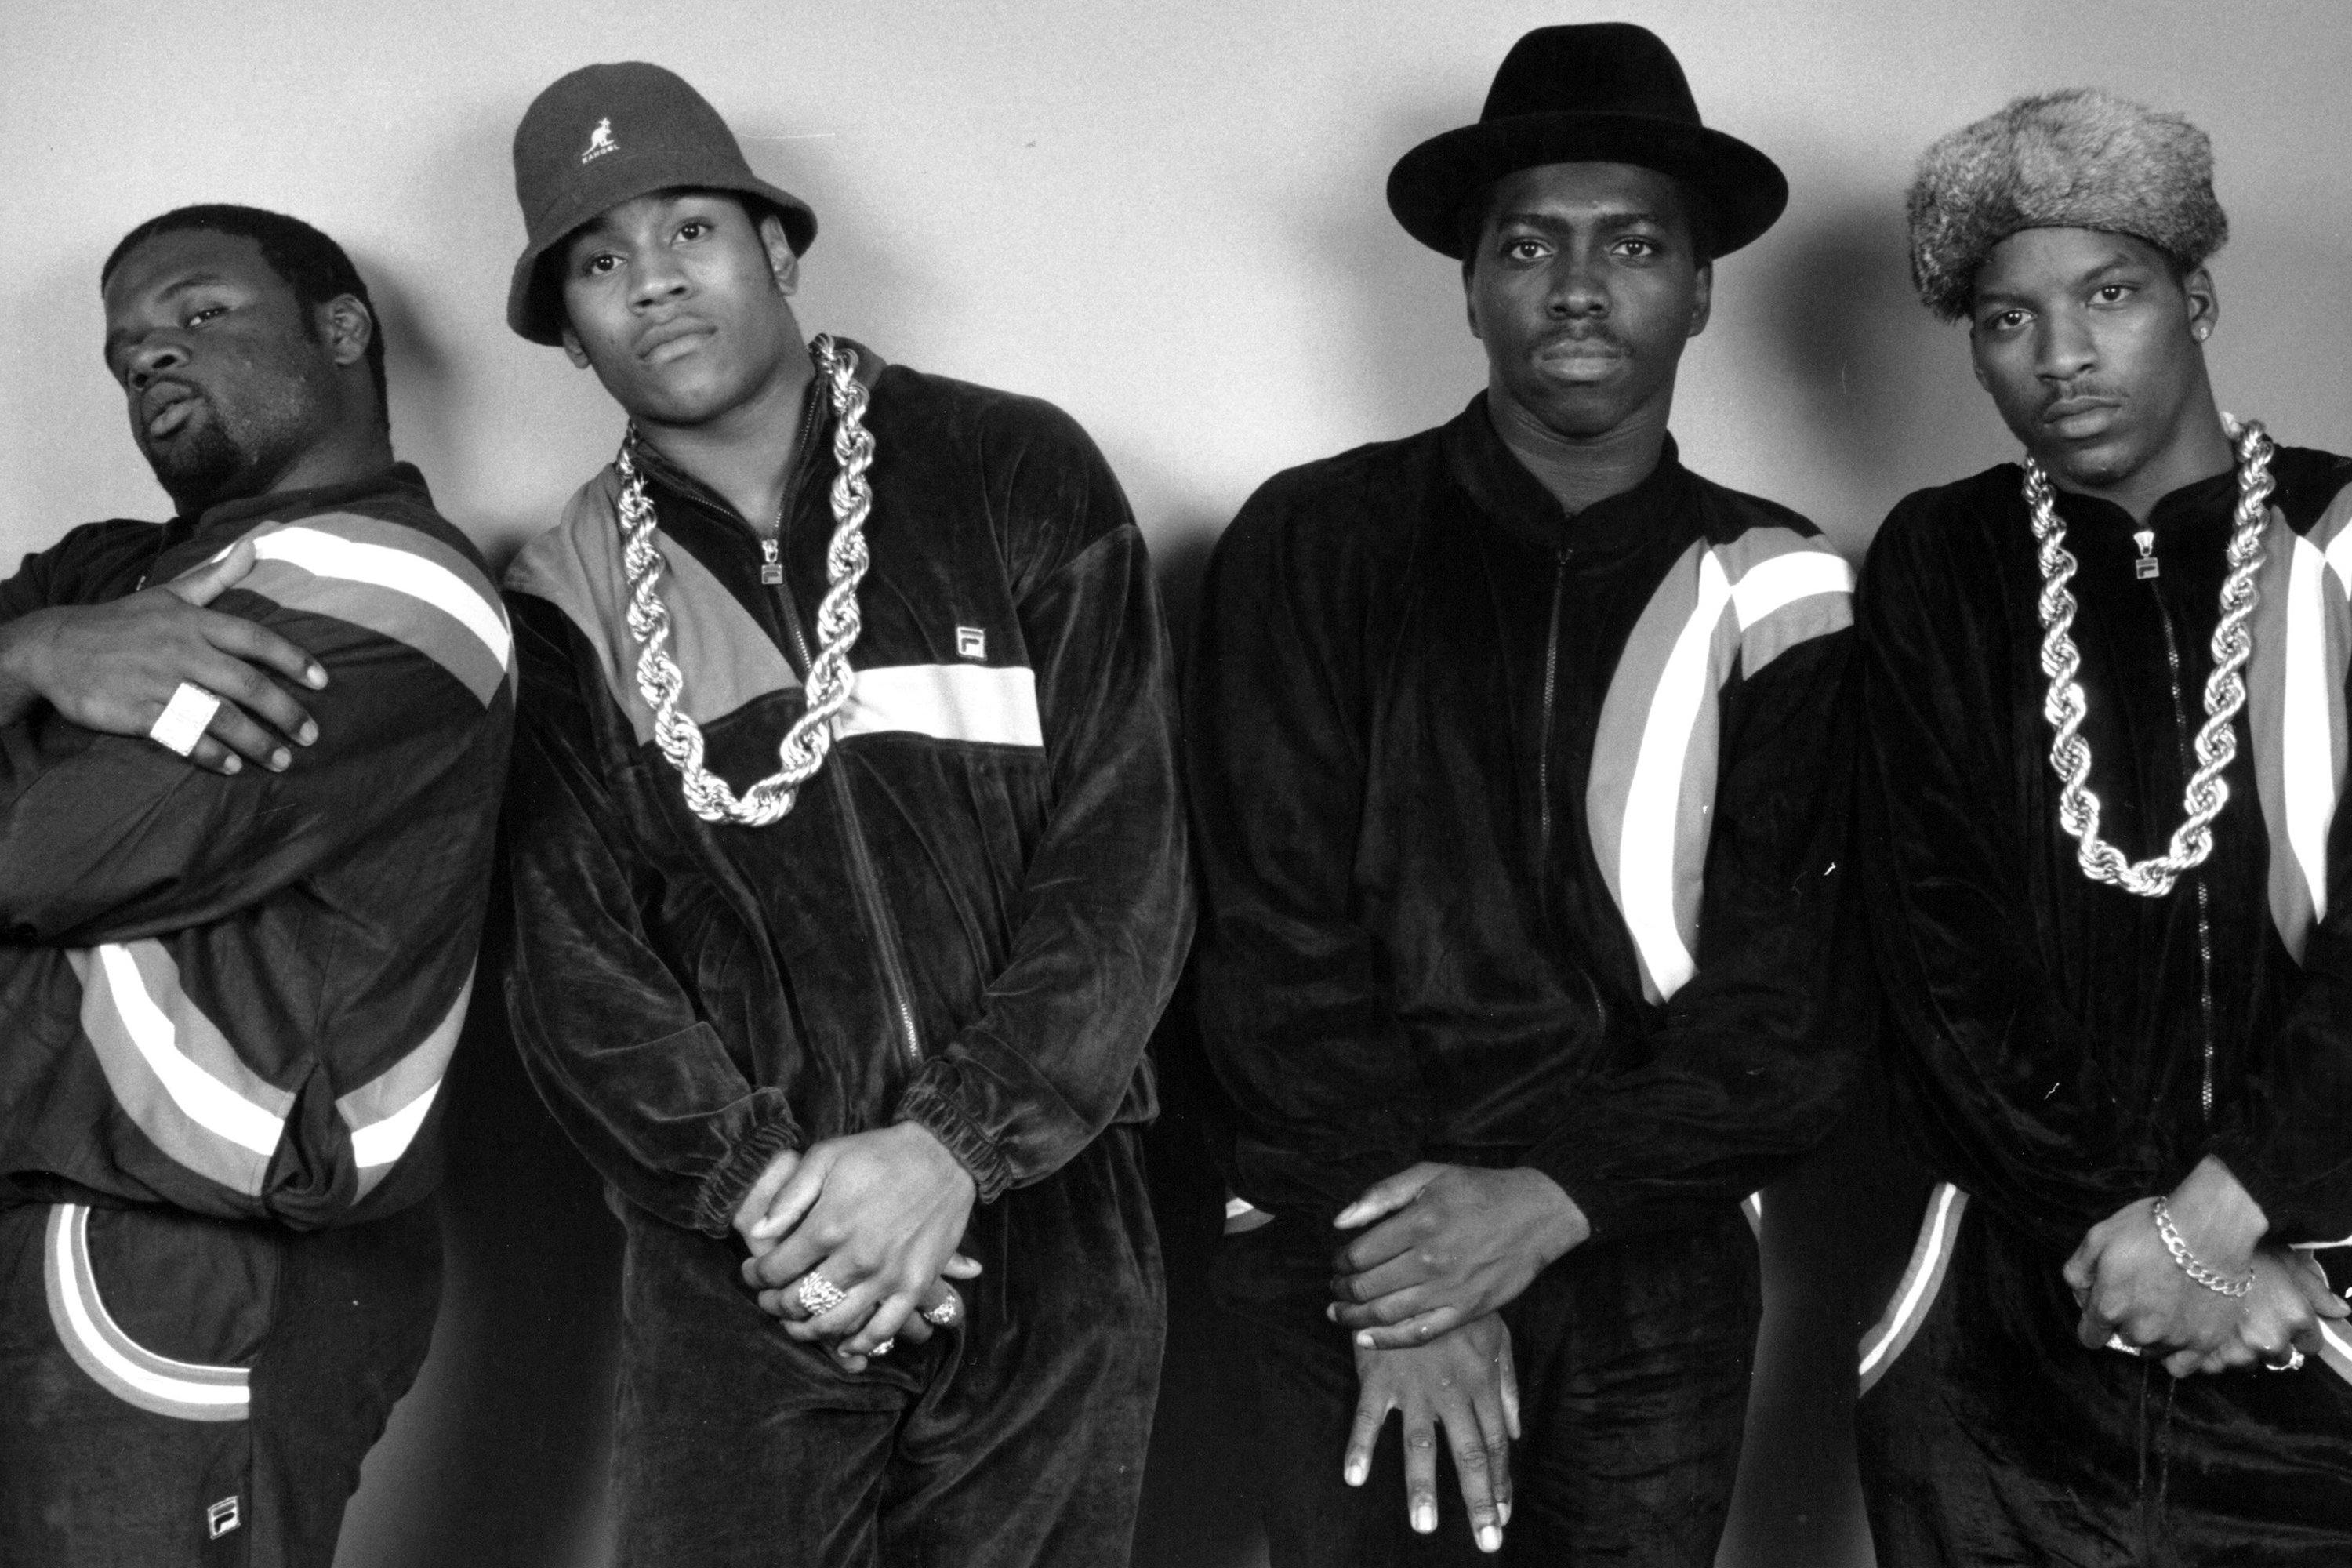 Rapper LL Cool J poses for a portrait